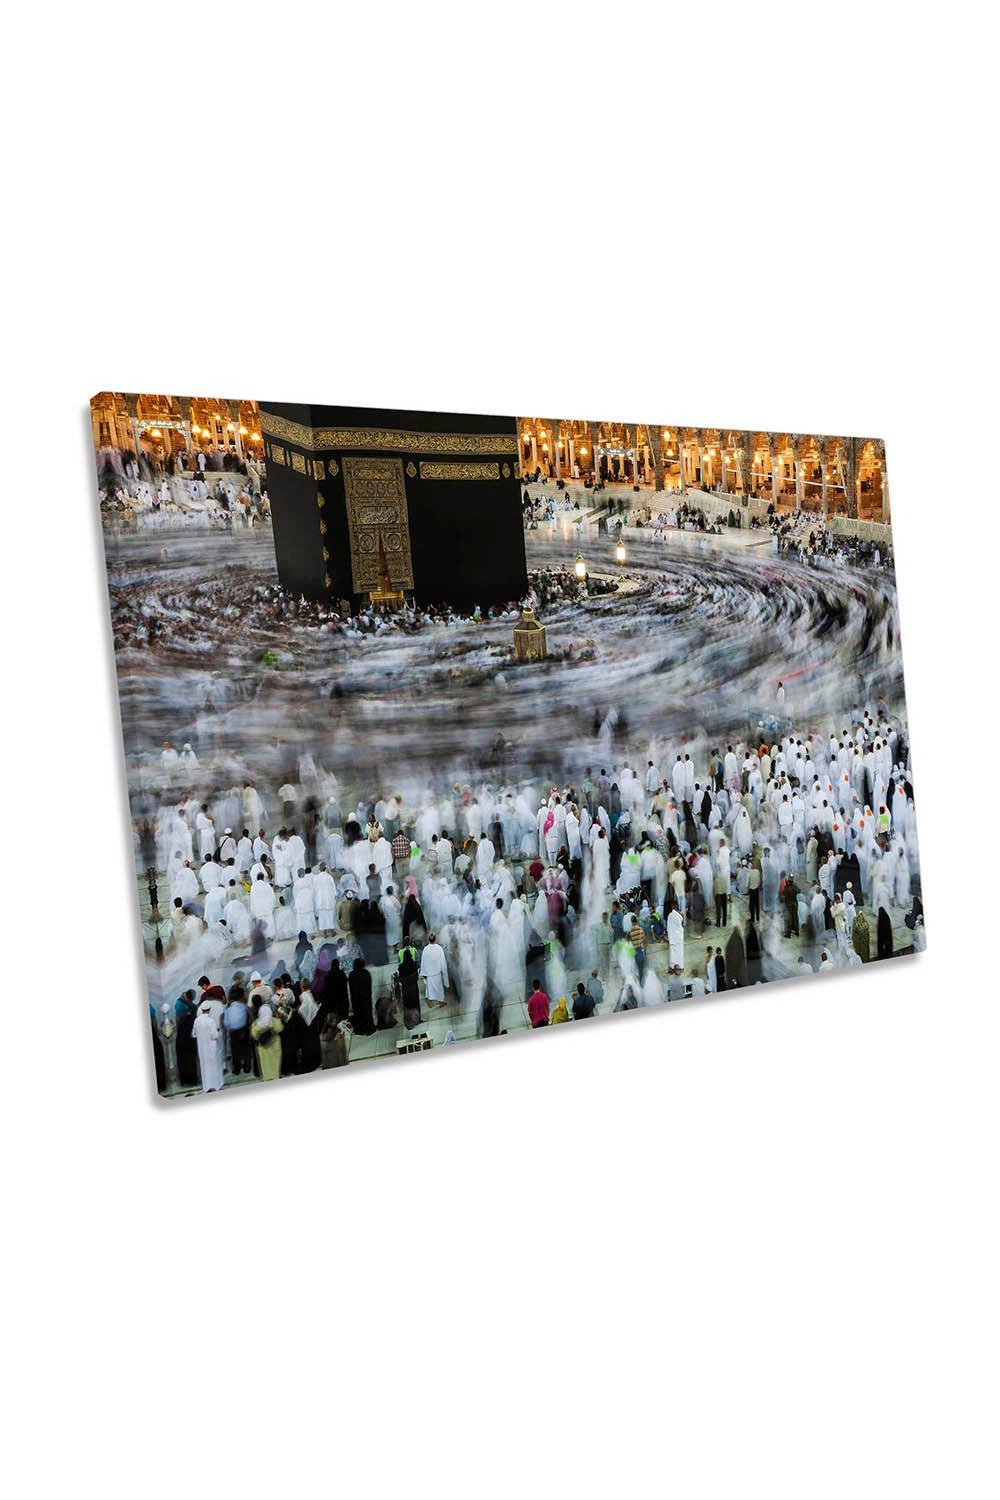 Souls Circling Pilgrimage Saudi Arabia Canvas Wall Art Picture Print